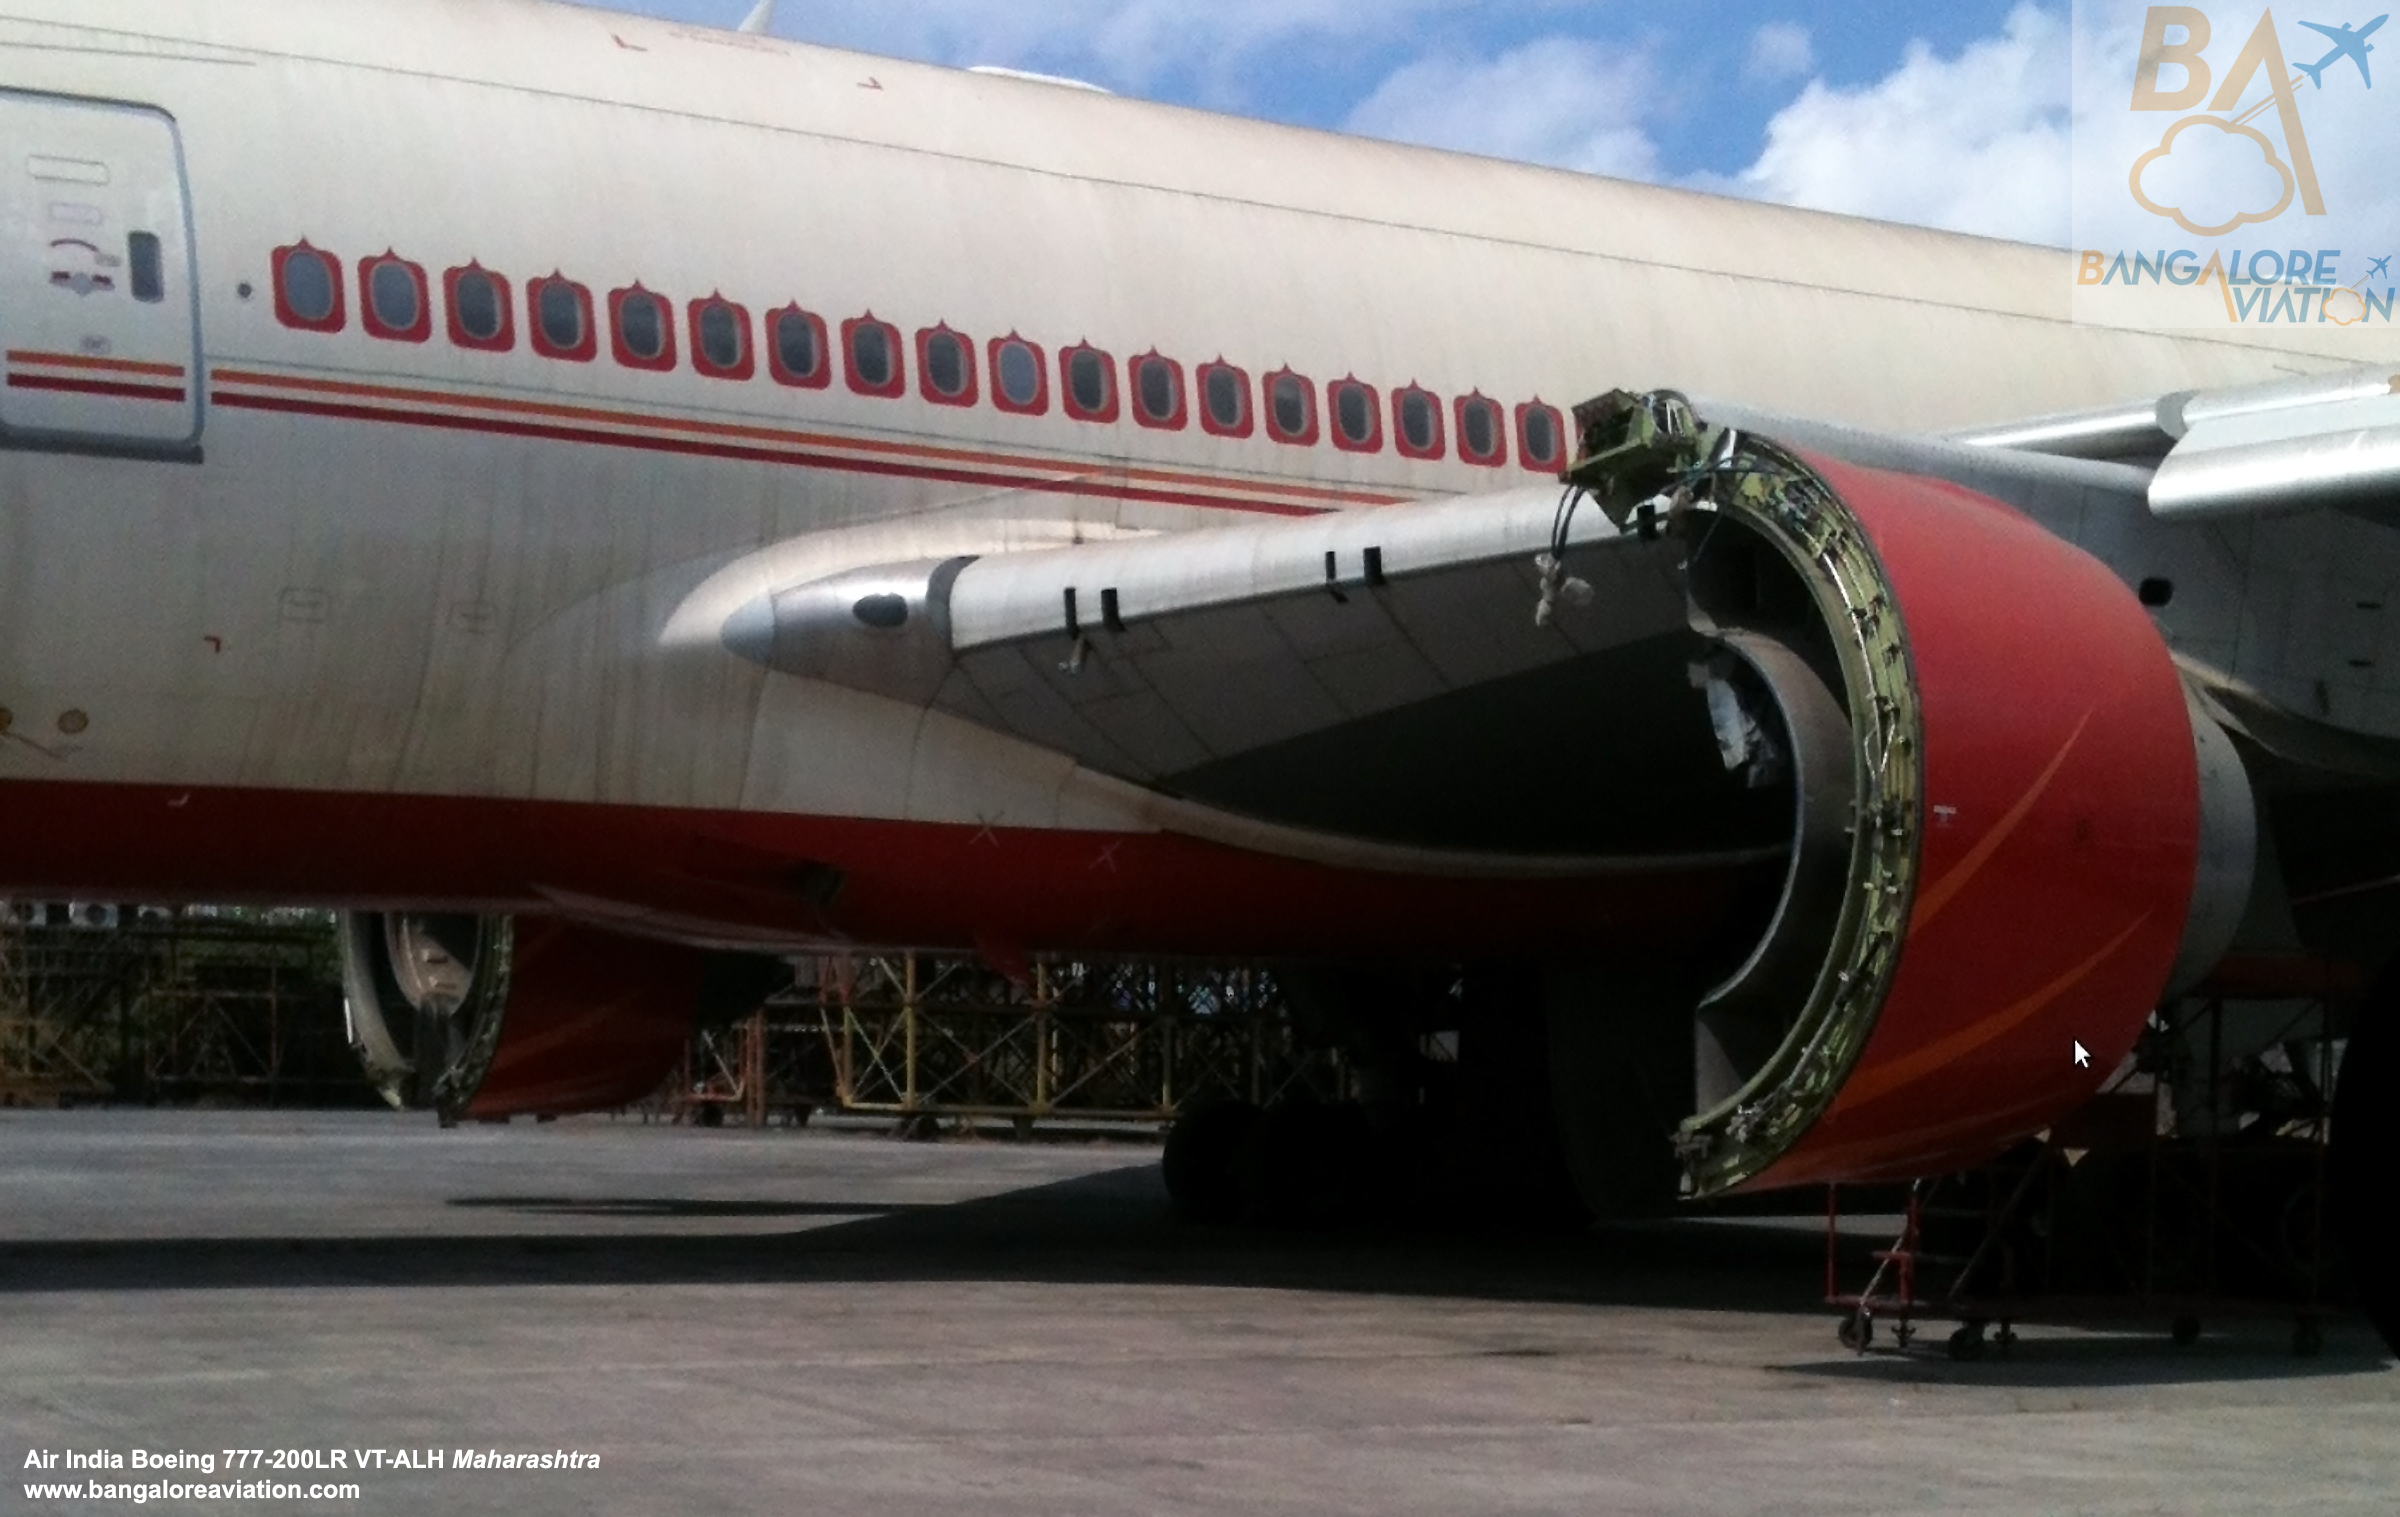 http://www.bangaloreaviation.com/wp-content/uploads/2014/03/VT-ALH_Maharashtra_Cannibalised_Air_India_Boeing_777-200LR_3.jpg